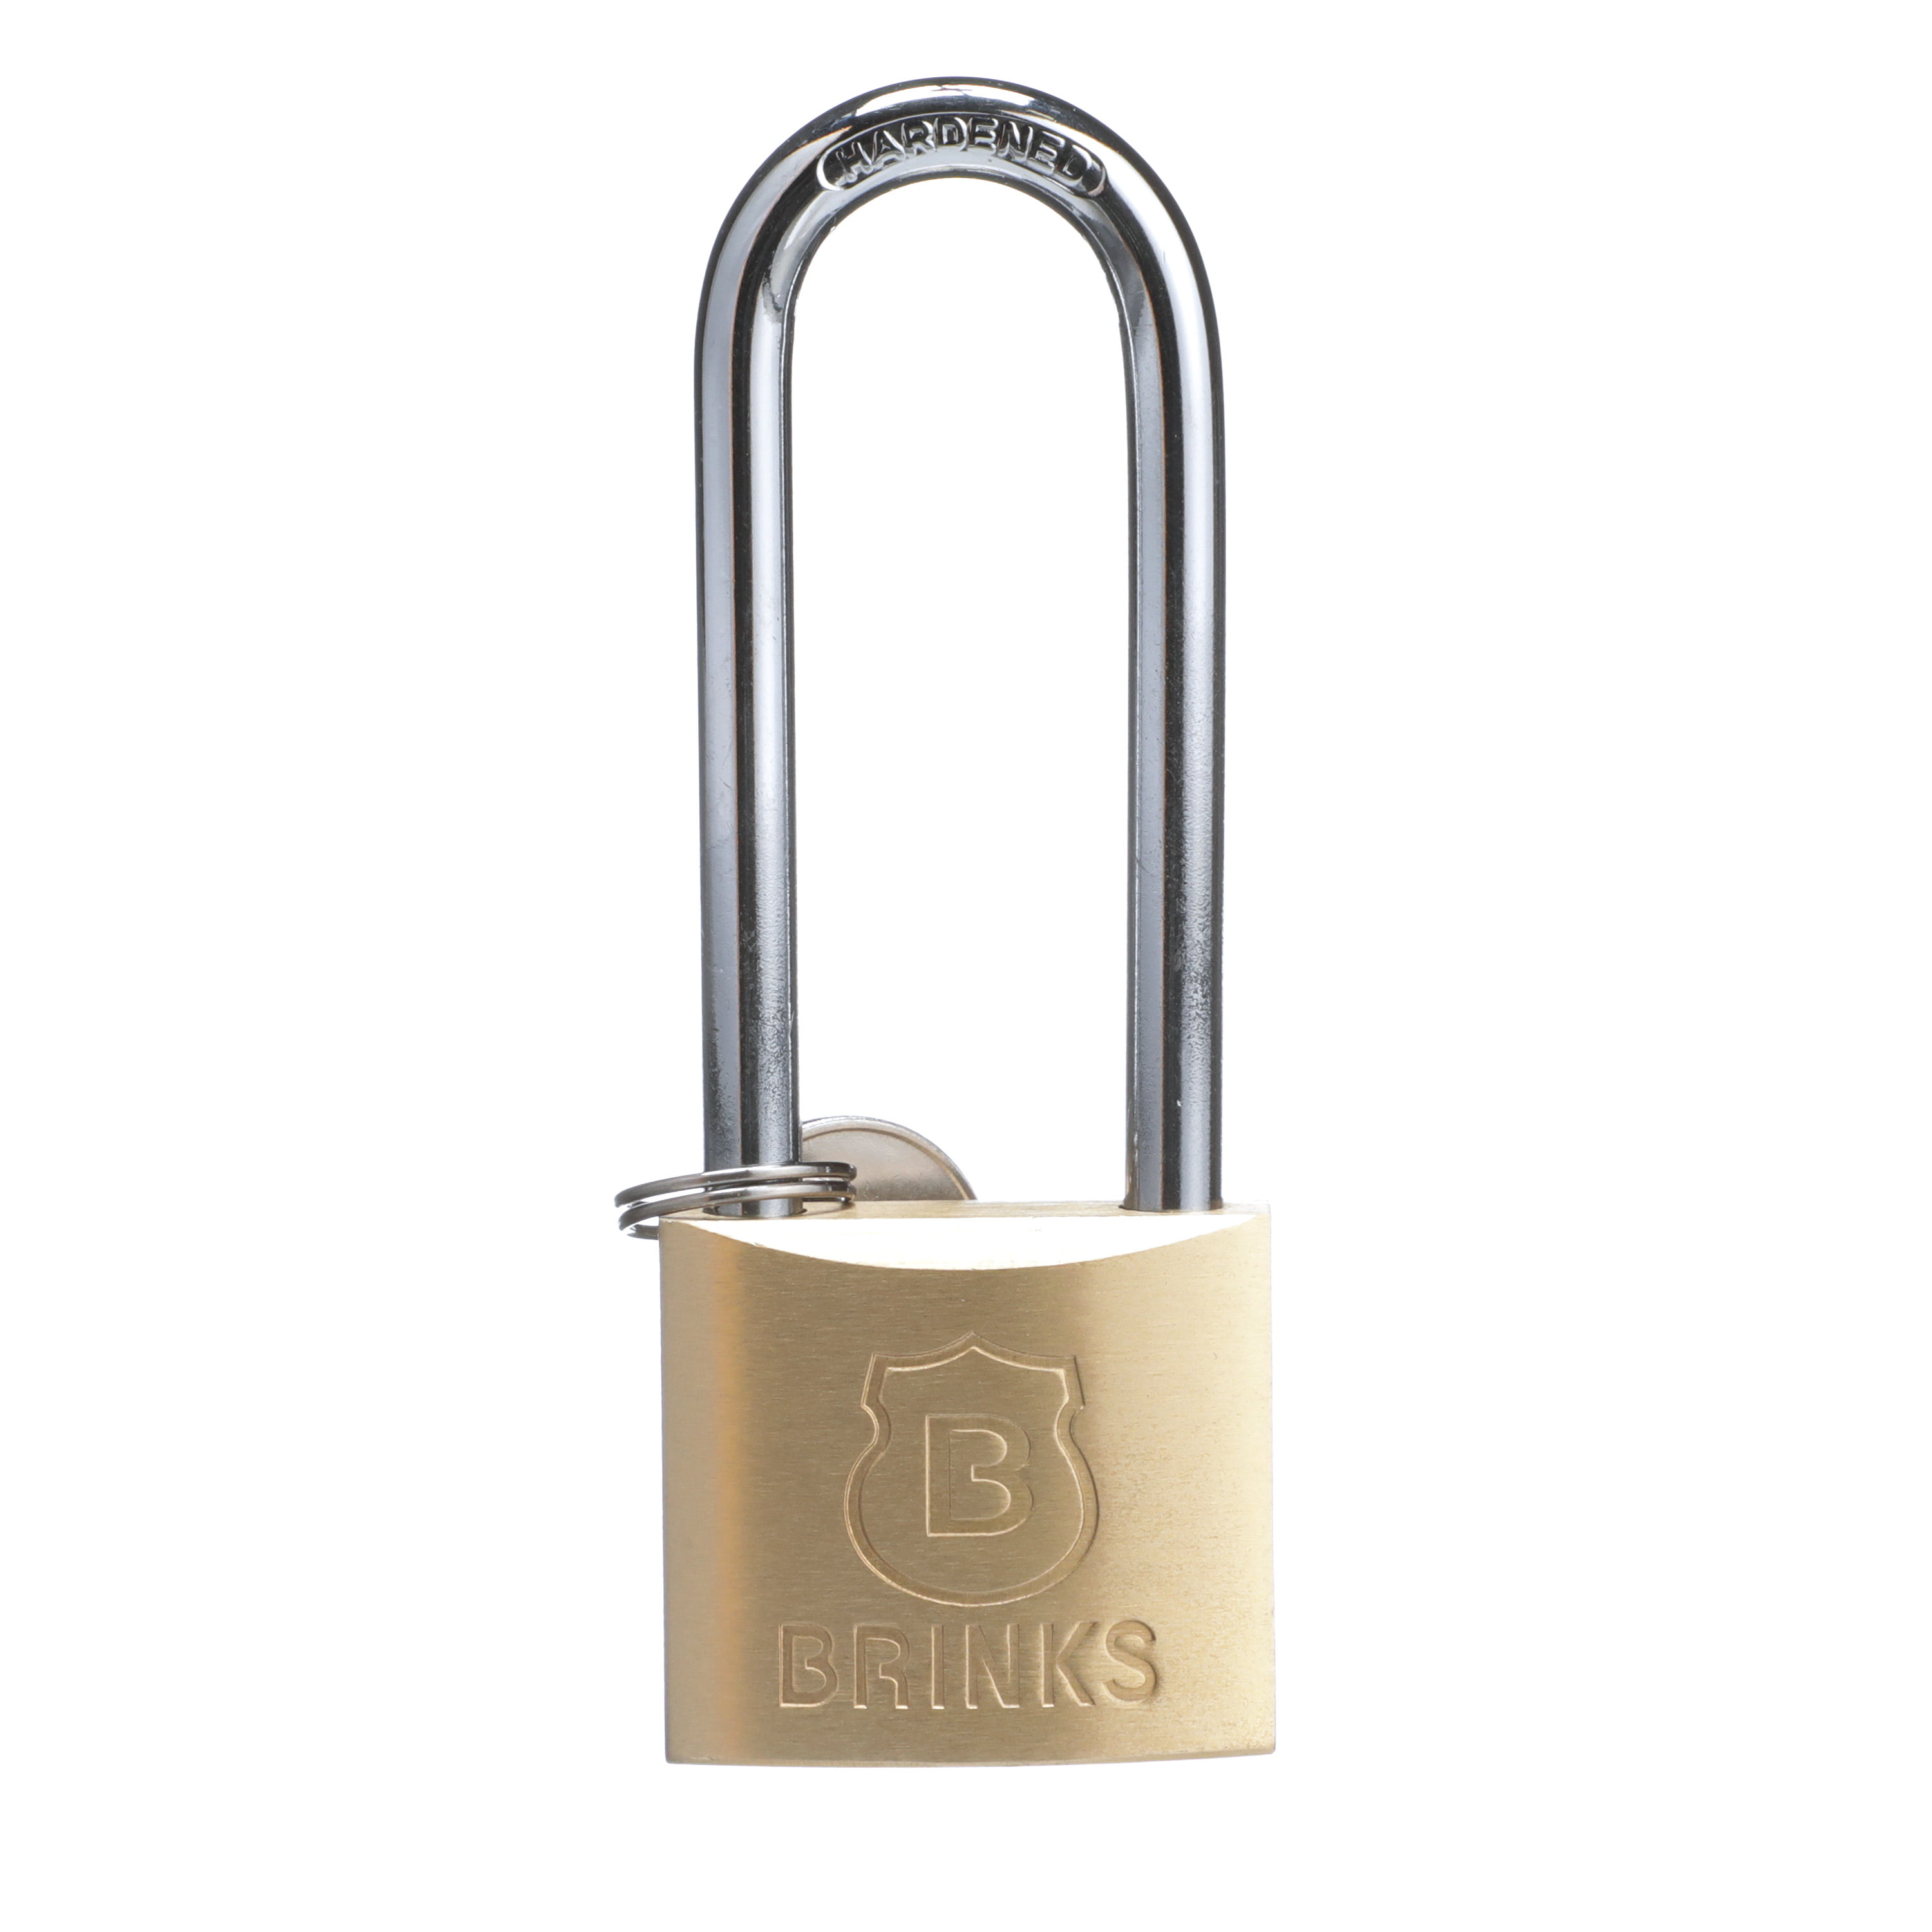 25Mm Solid Brass Padlock Steel Shackle Security Home Shed Garage Locker 3 Keys 